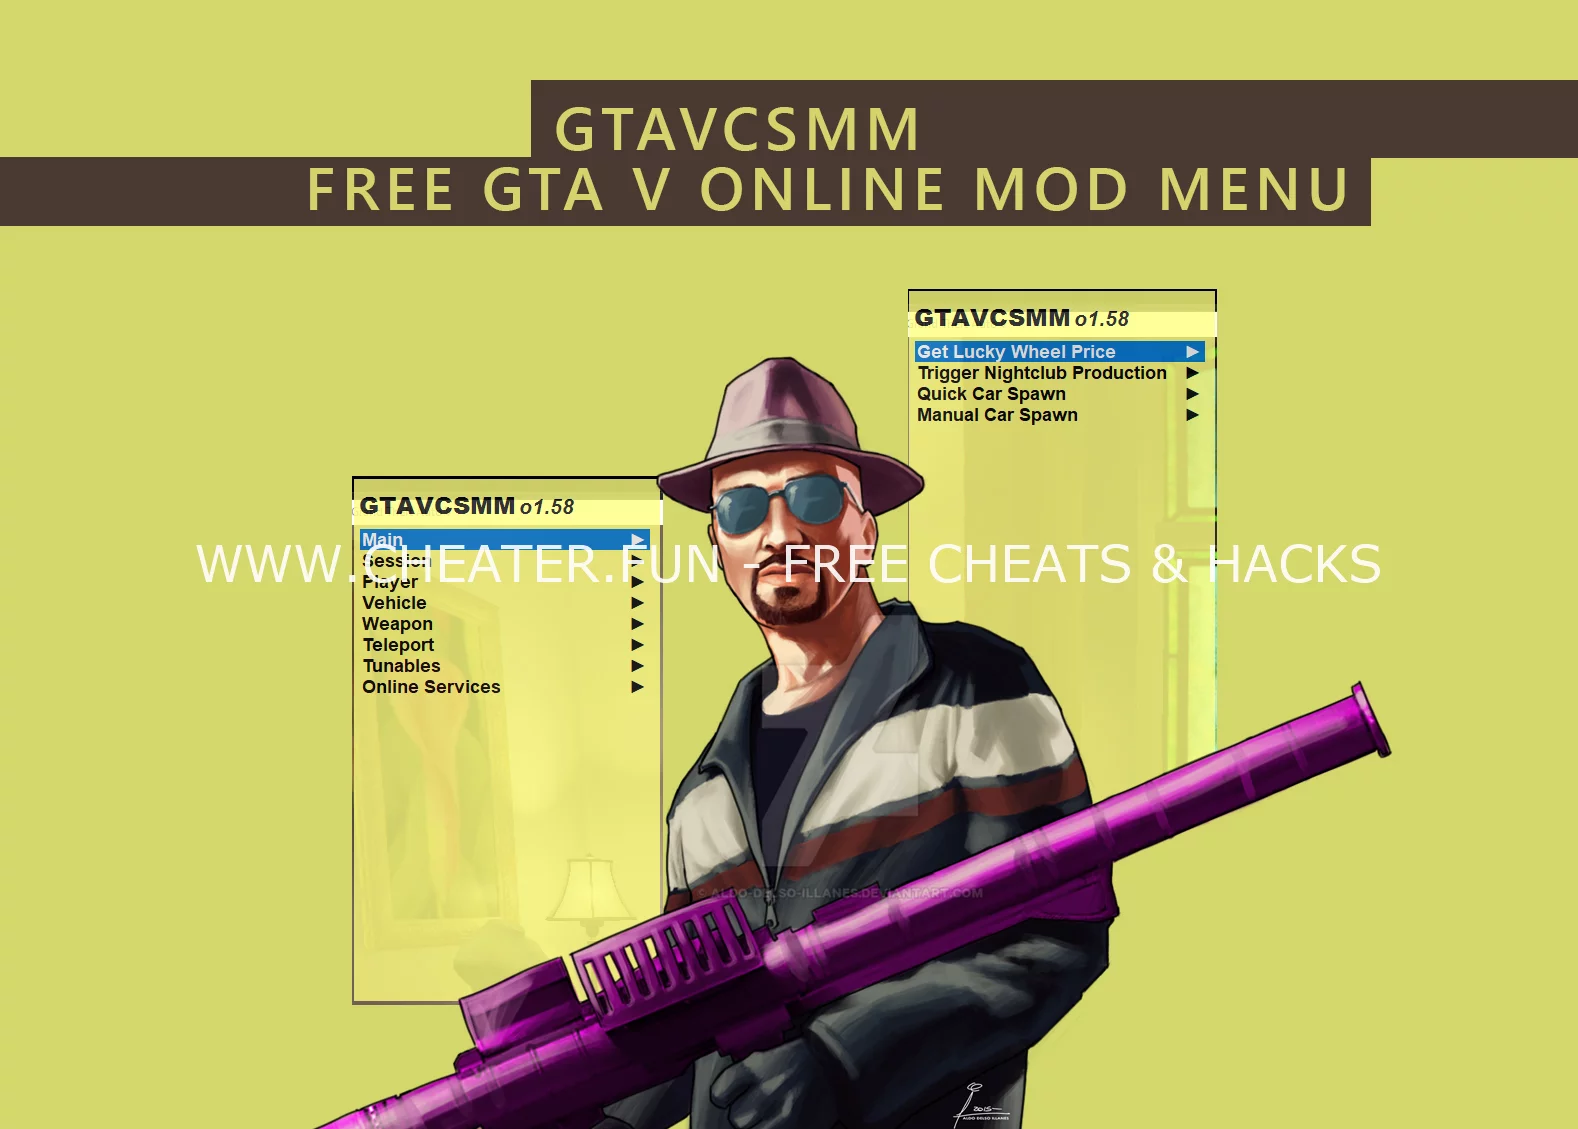 GTAVCSMM menu mod for GTA V Online v1.58